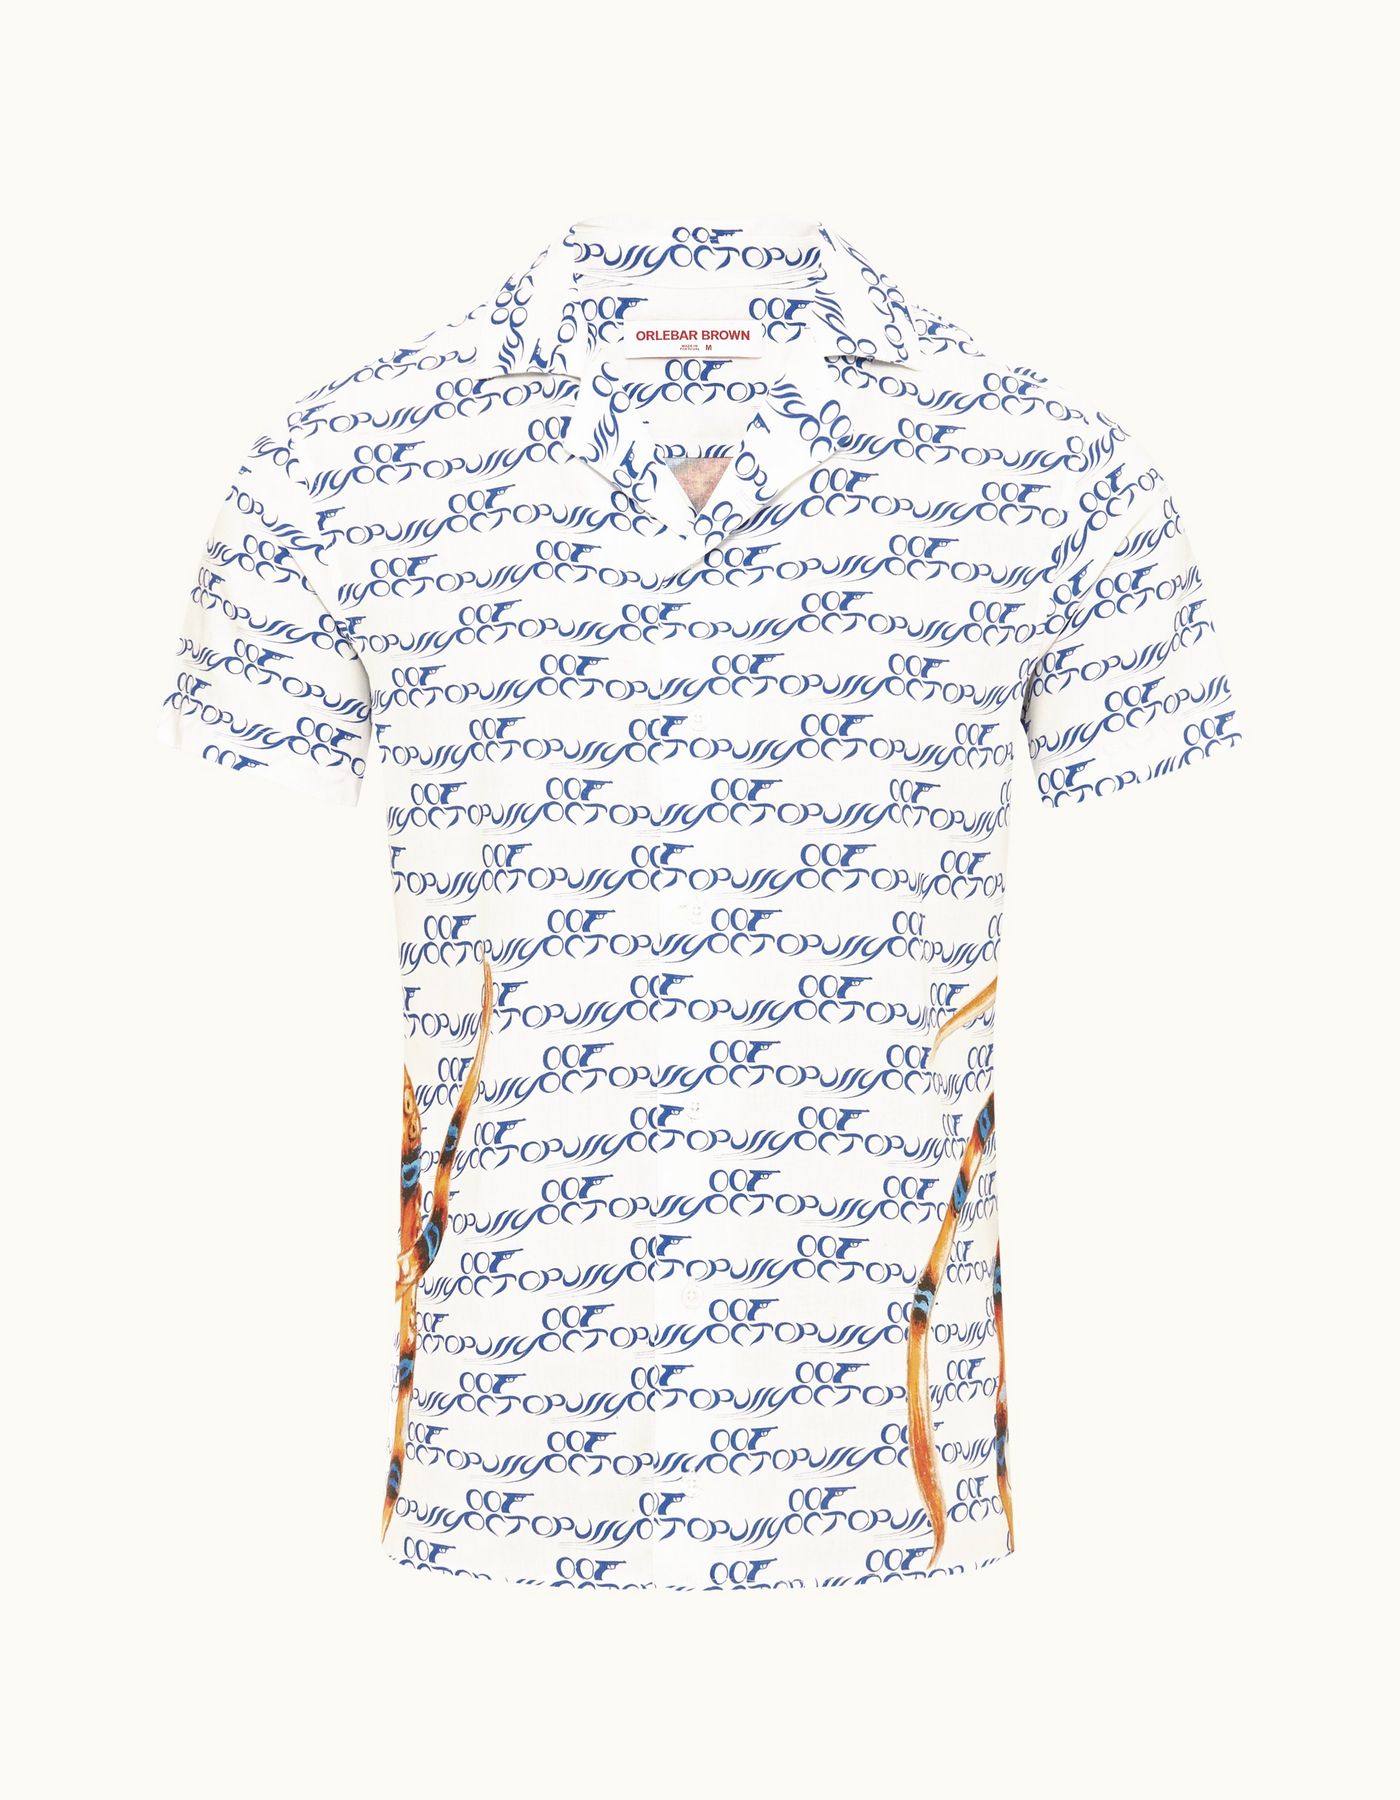 Travis - Mens 007 Octopussy Capri Collar Linen Shirt